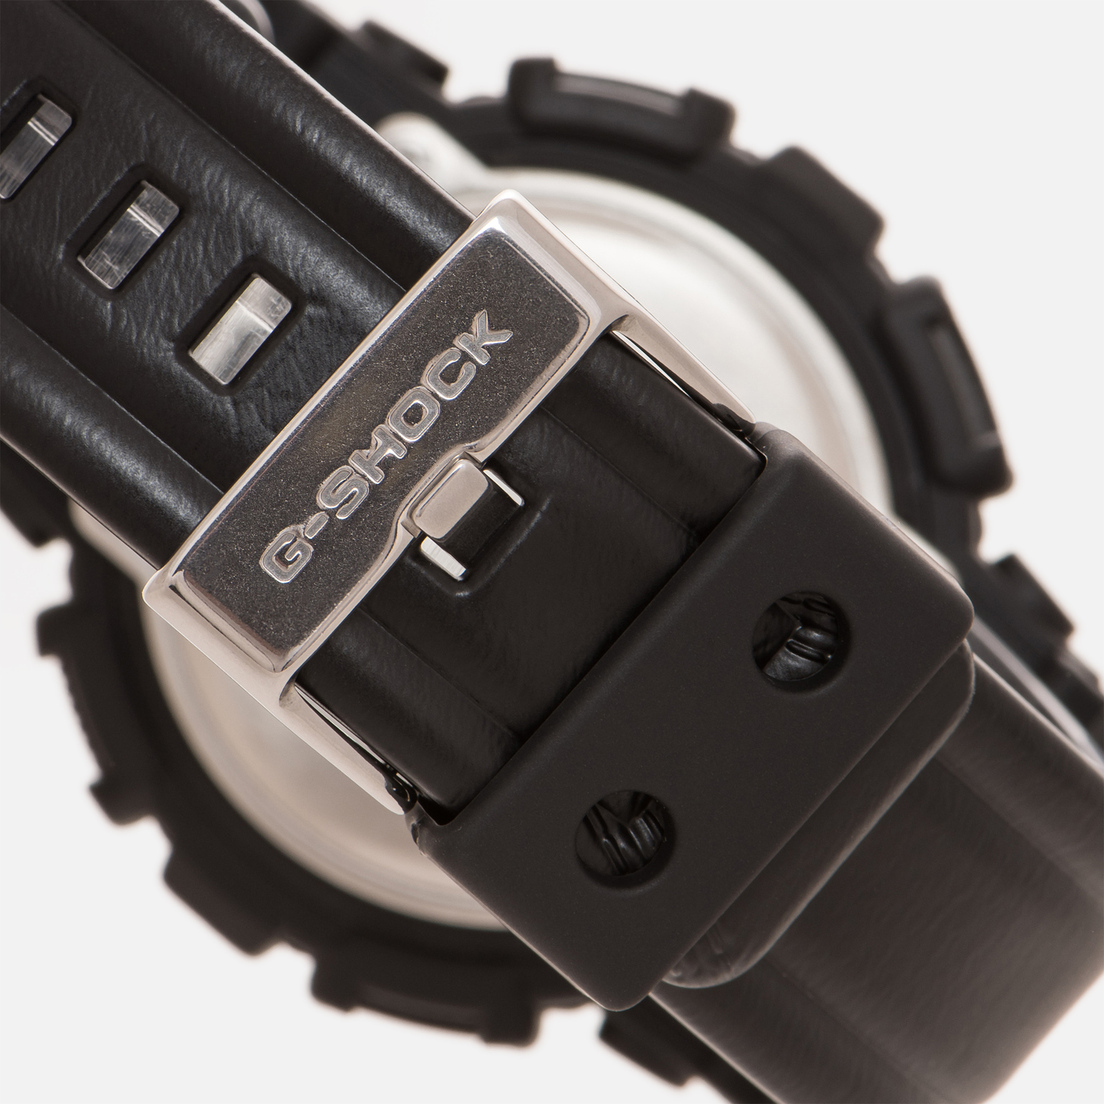 CASIO Наручные часы G-SHOCK GA-110BT-1A Black Leather Texture Series